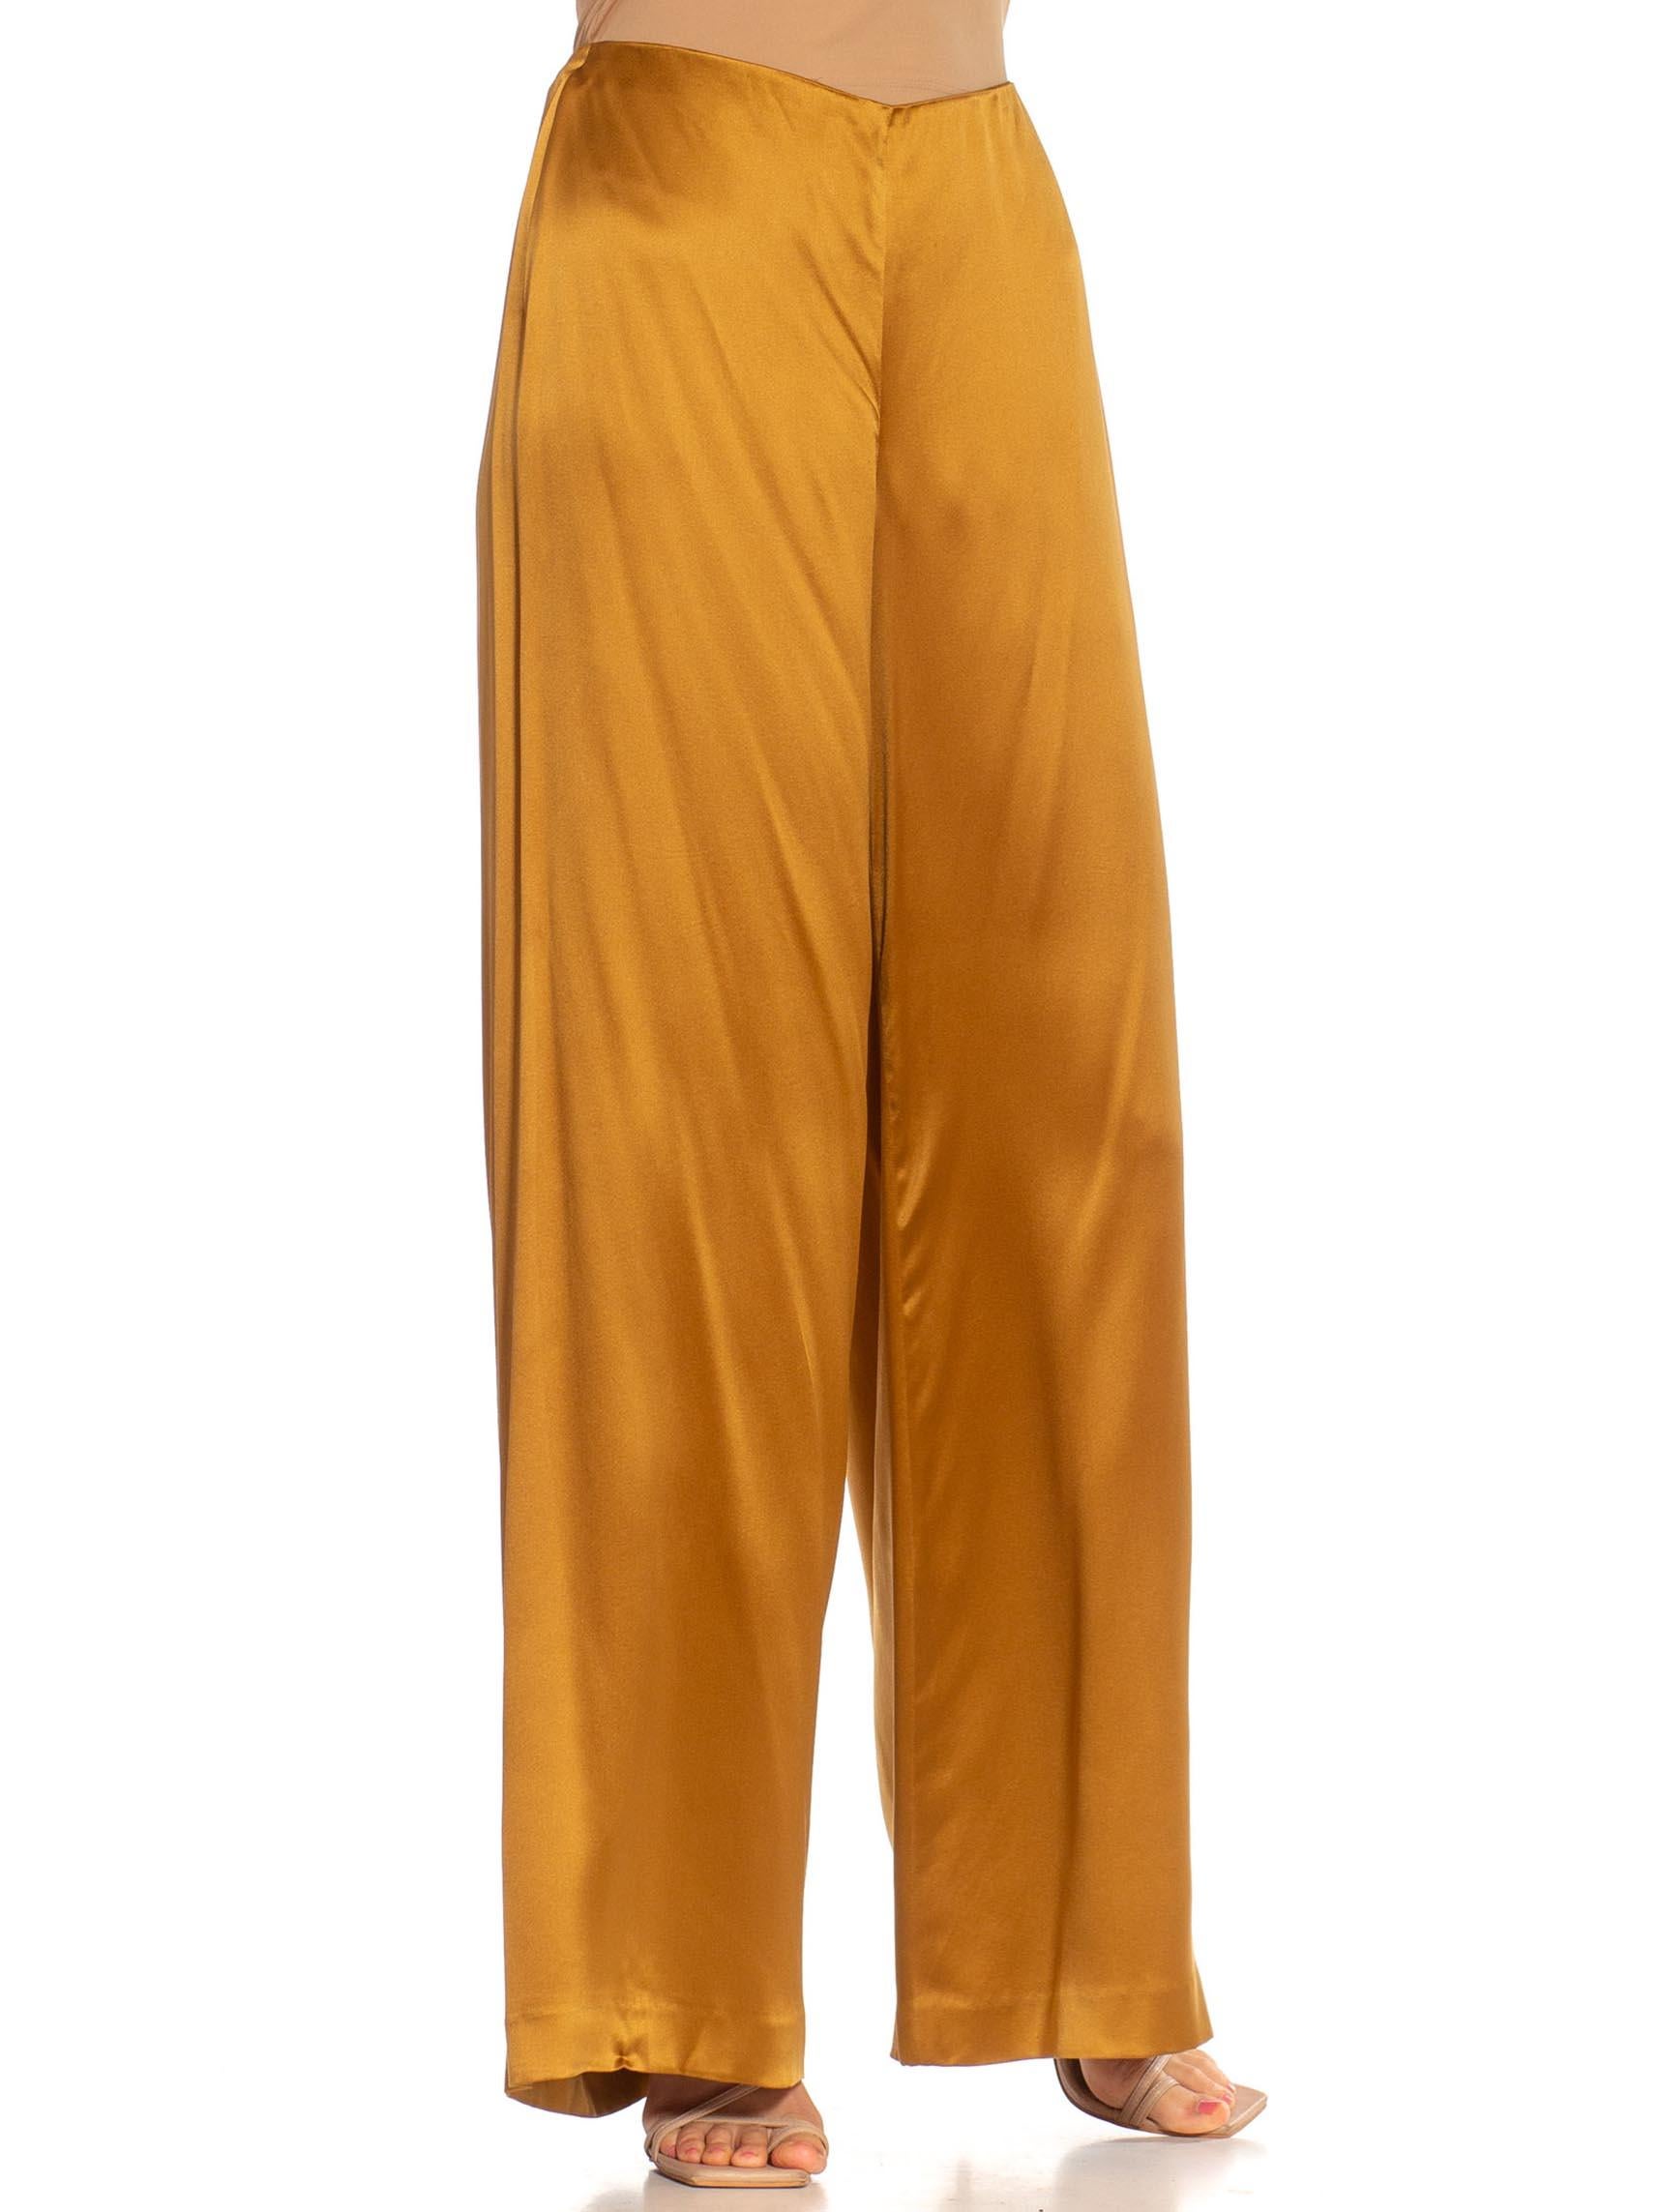 Orange 1990S RALPH LAUREN PURPLE LABEL Gold Silk Satin Pants